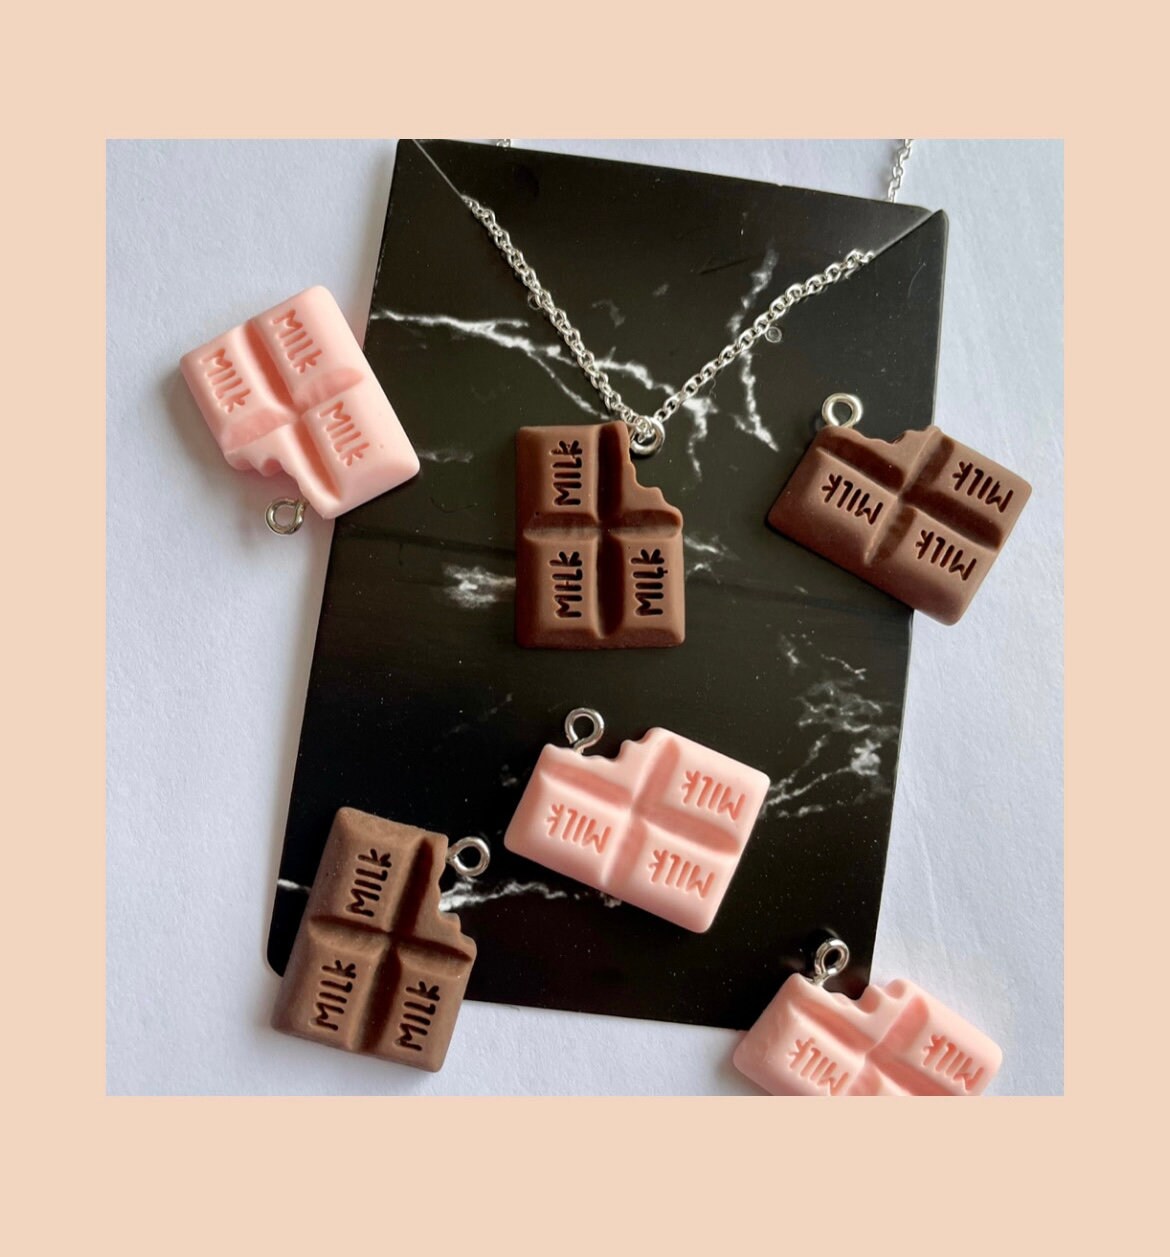 Cute Chocolate Bars Charms, Kawaii Polymer Clay Chocolate Charm, Miniature  Cute Food Charm, Kawaii Best Friends Charm Gift, Cute Fake Food 